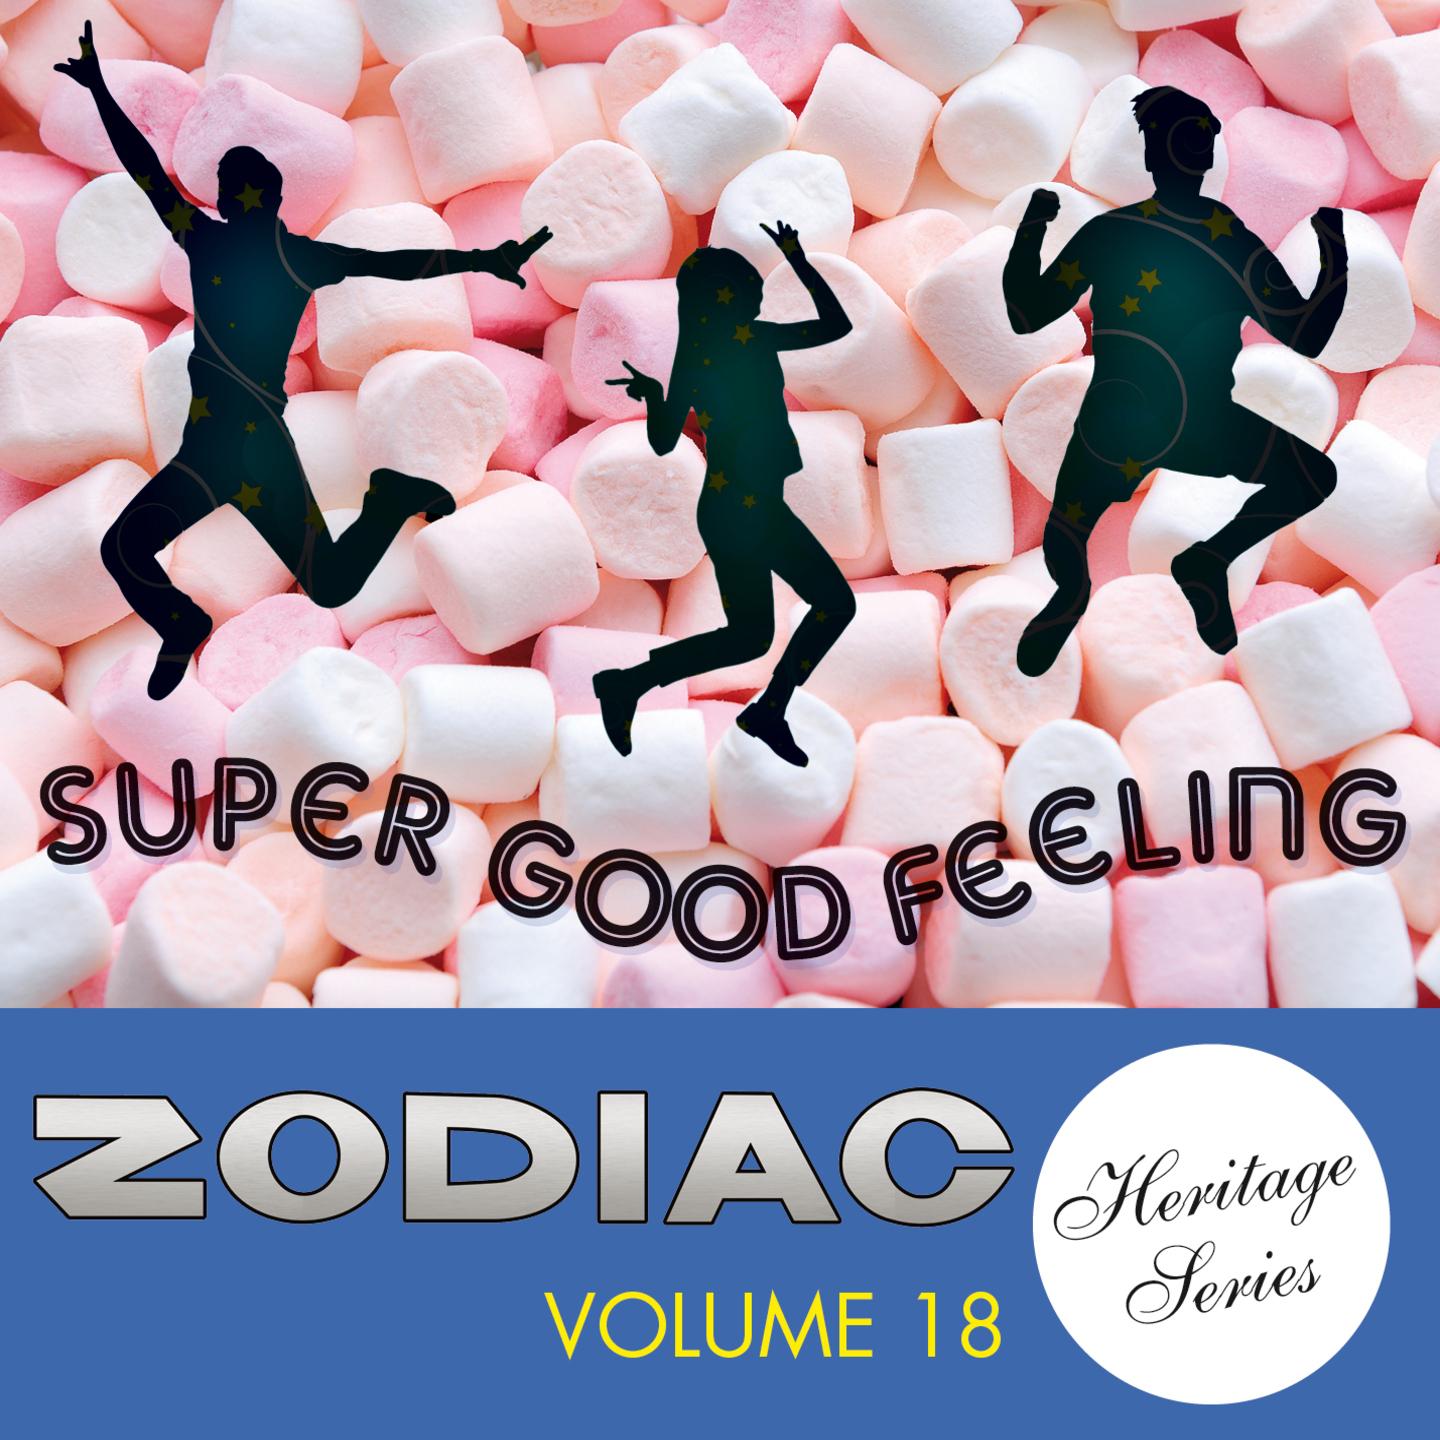 Super Good Feeling Zodiac Heritage Series, Vol. 18